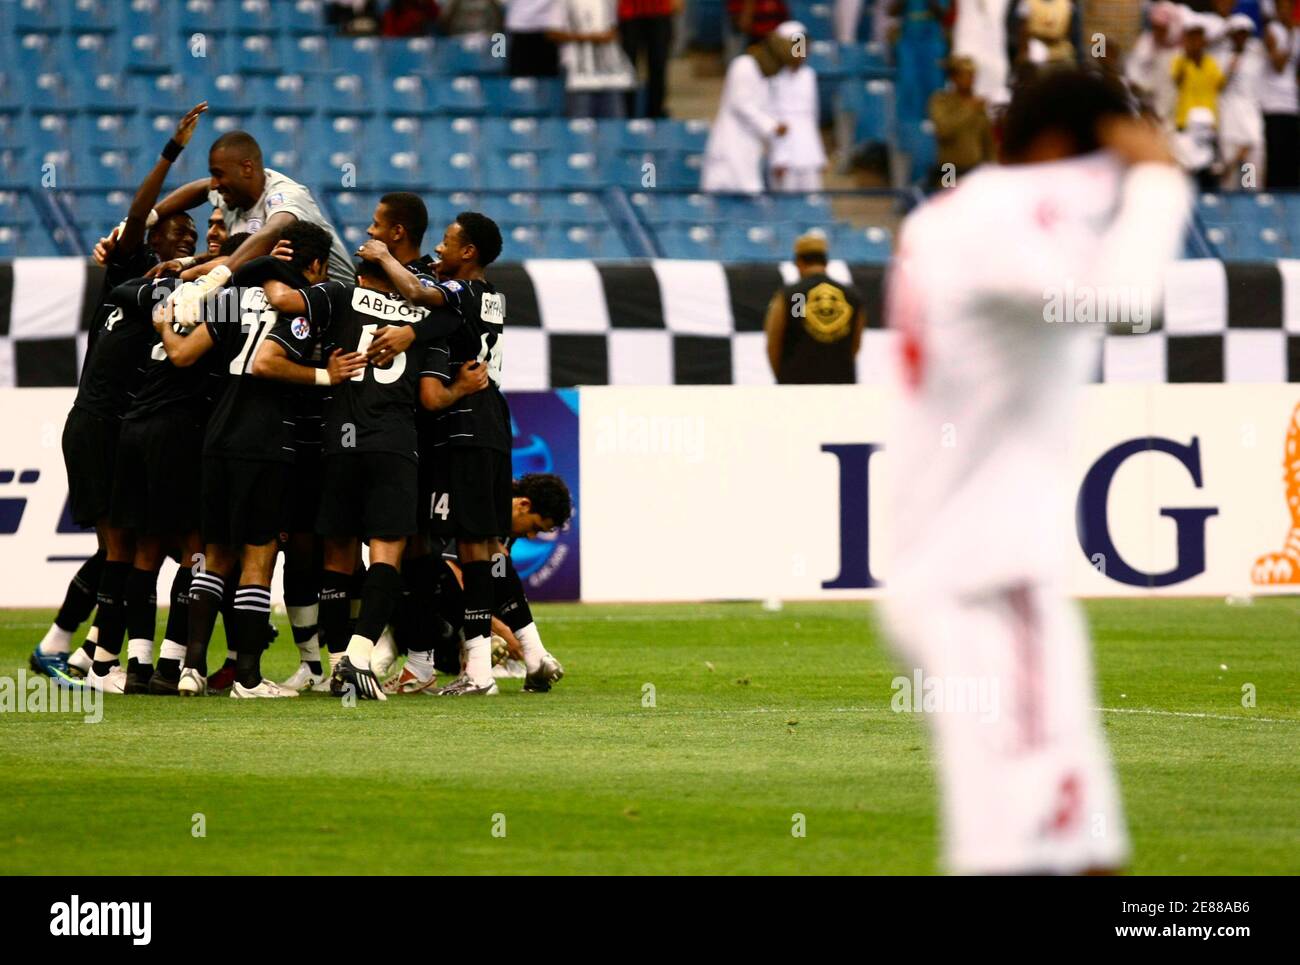 Saudi Arabia's Al-Shabab players celebrate scoring a goal against UAE's Al Sharjah during their AFC Champions League soccer match in Riyadh April 21, 2009.  REUTERS/Fahad Shadeed  (SAUDI ARABIA SPORT SOCCER) Stock Photo